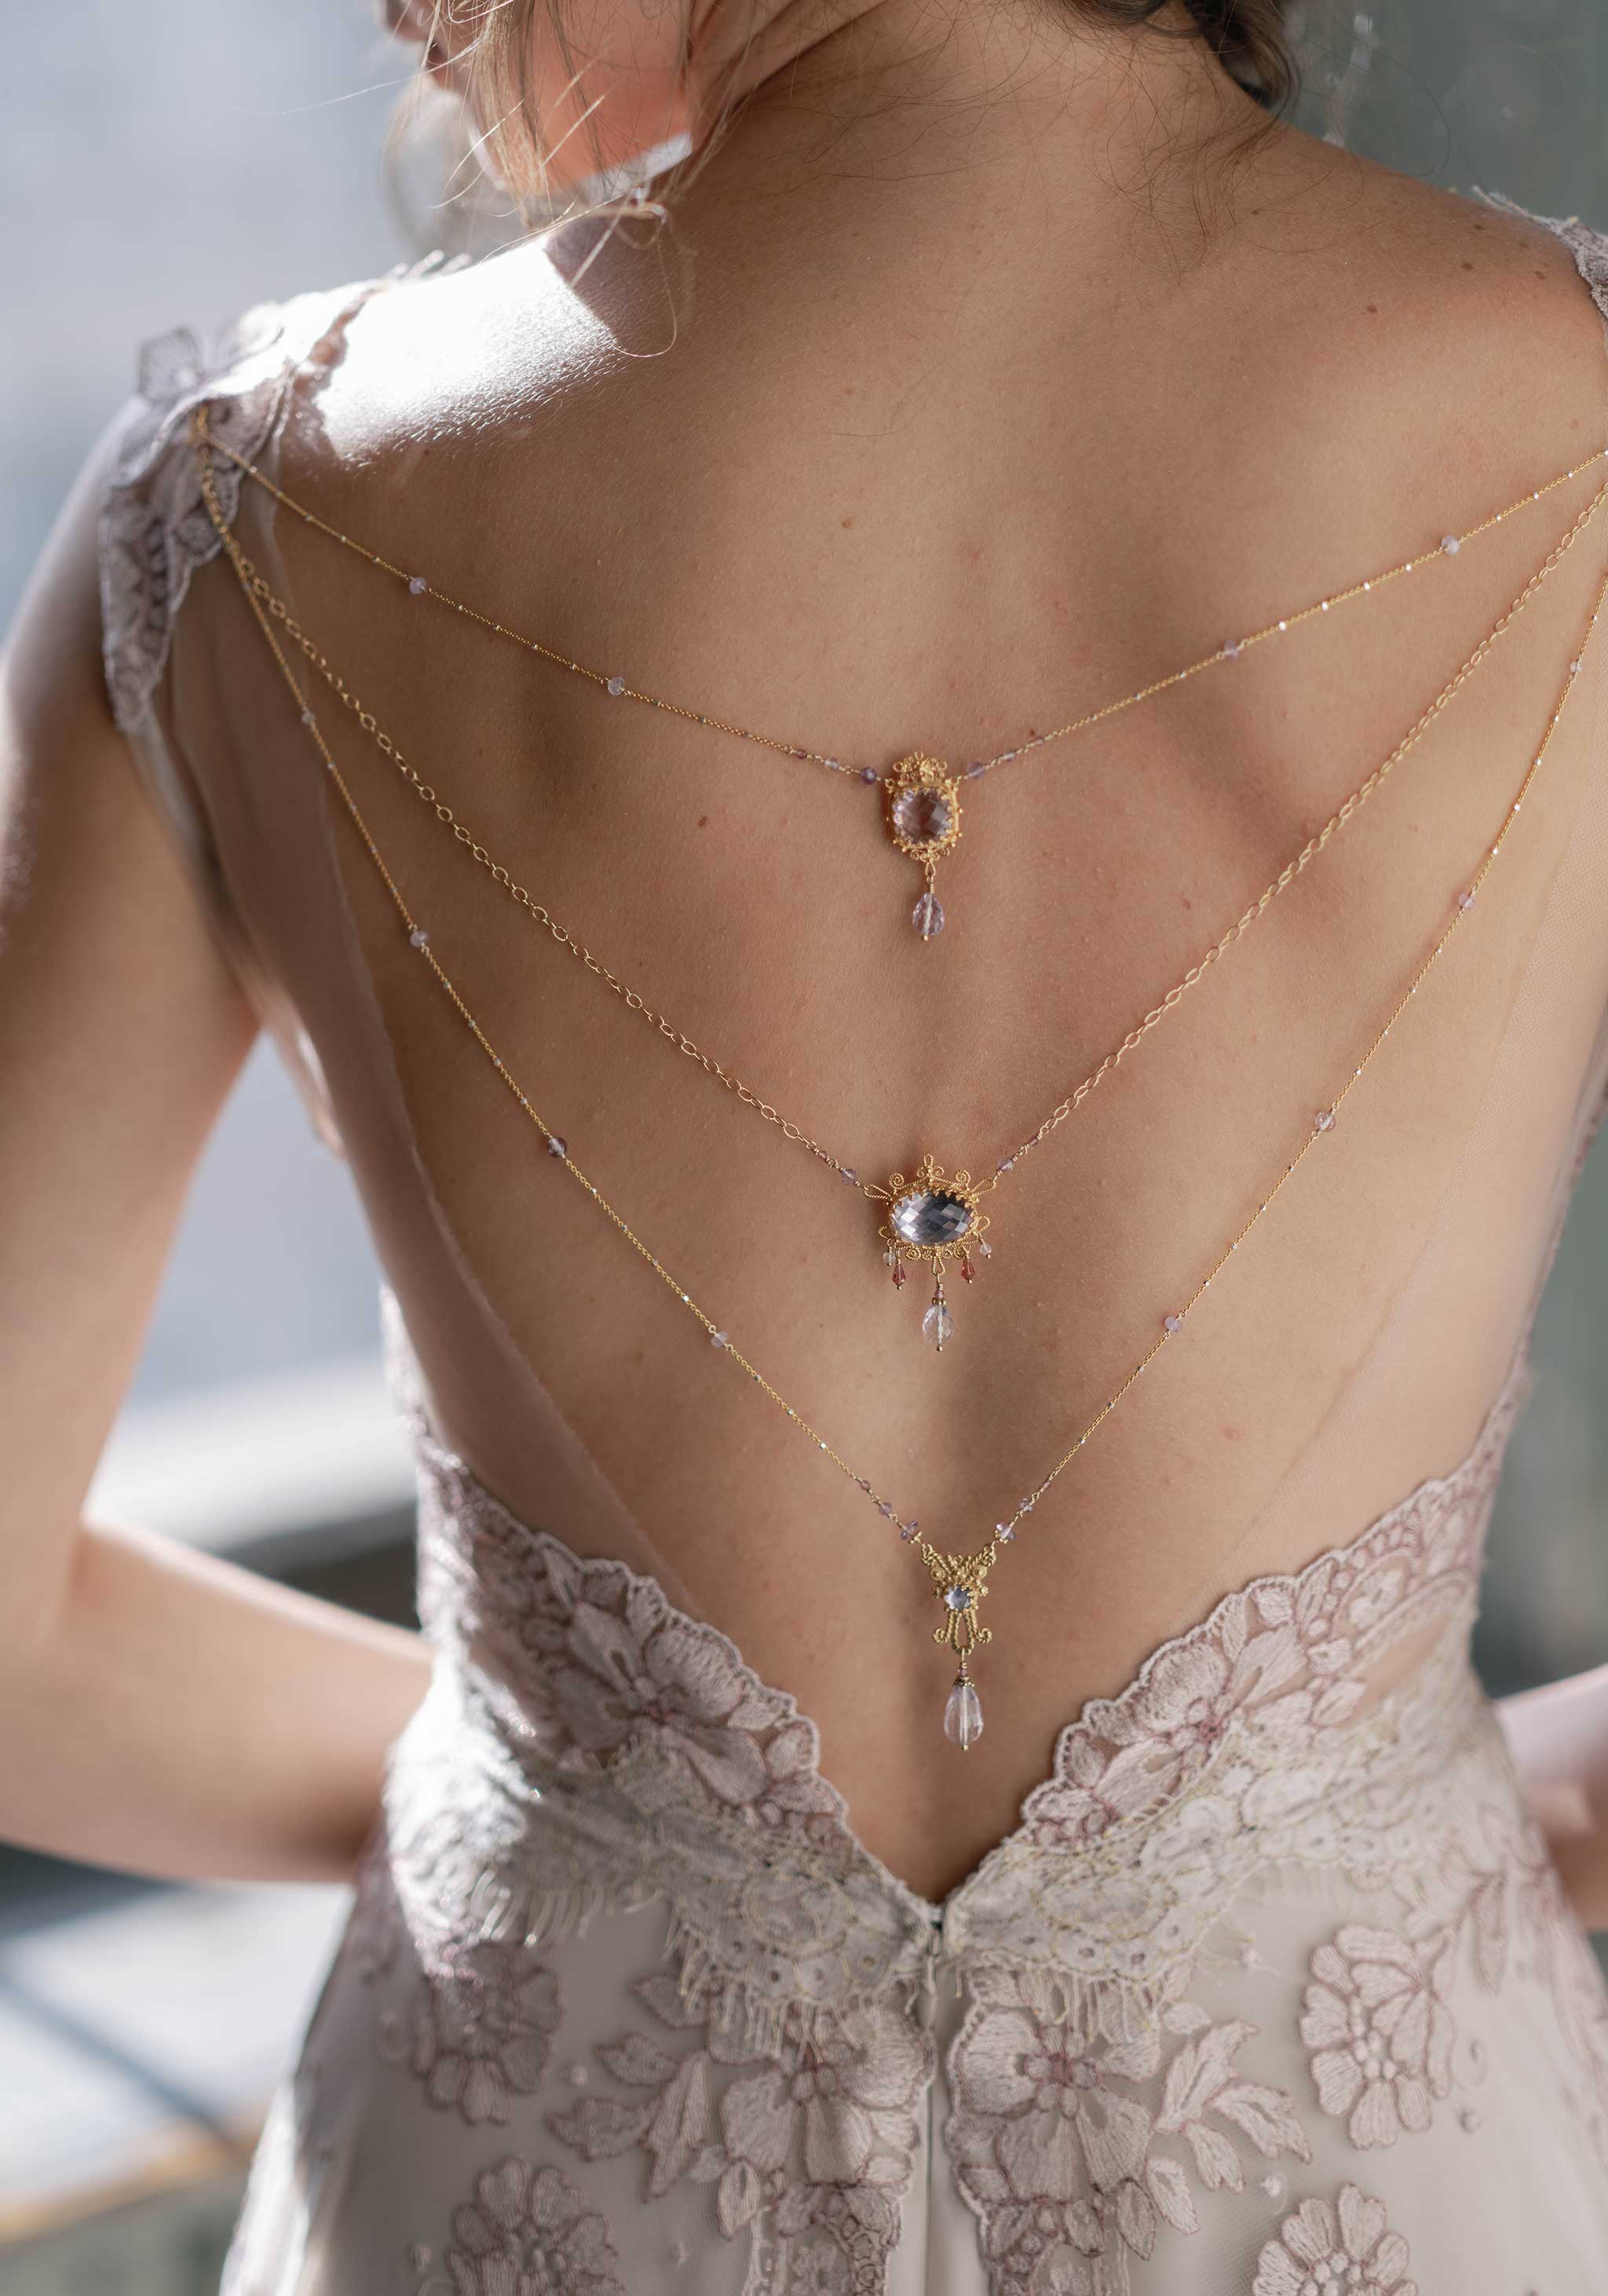 Besufy Adult Jewelry Set Wedding Bridal Queen Style Fully Shiny Rhinestone  Necklace Earrings Jewelry Set - Walmart.com